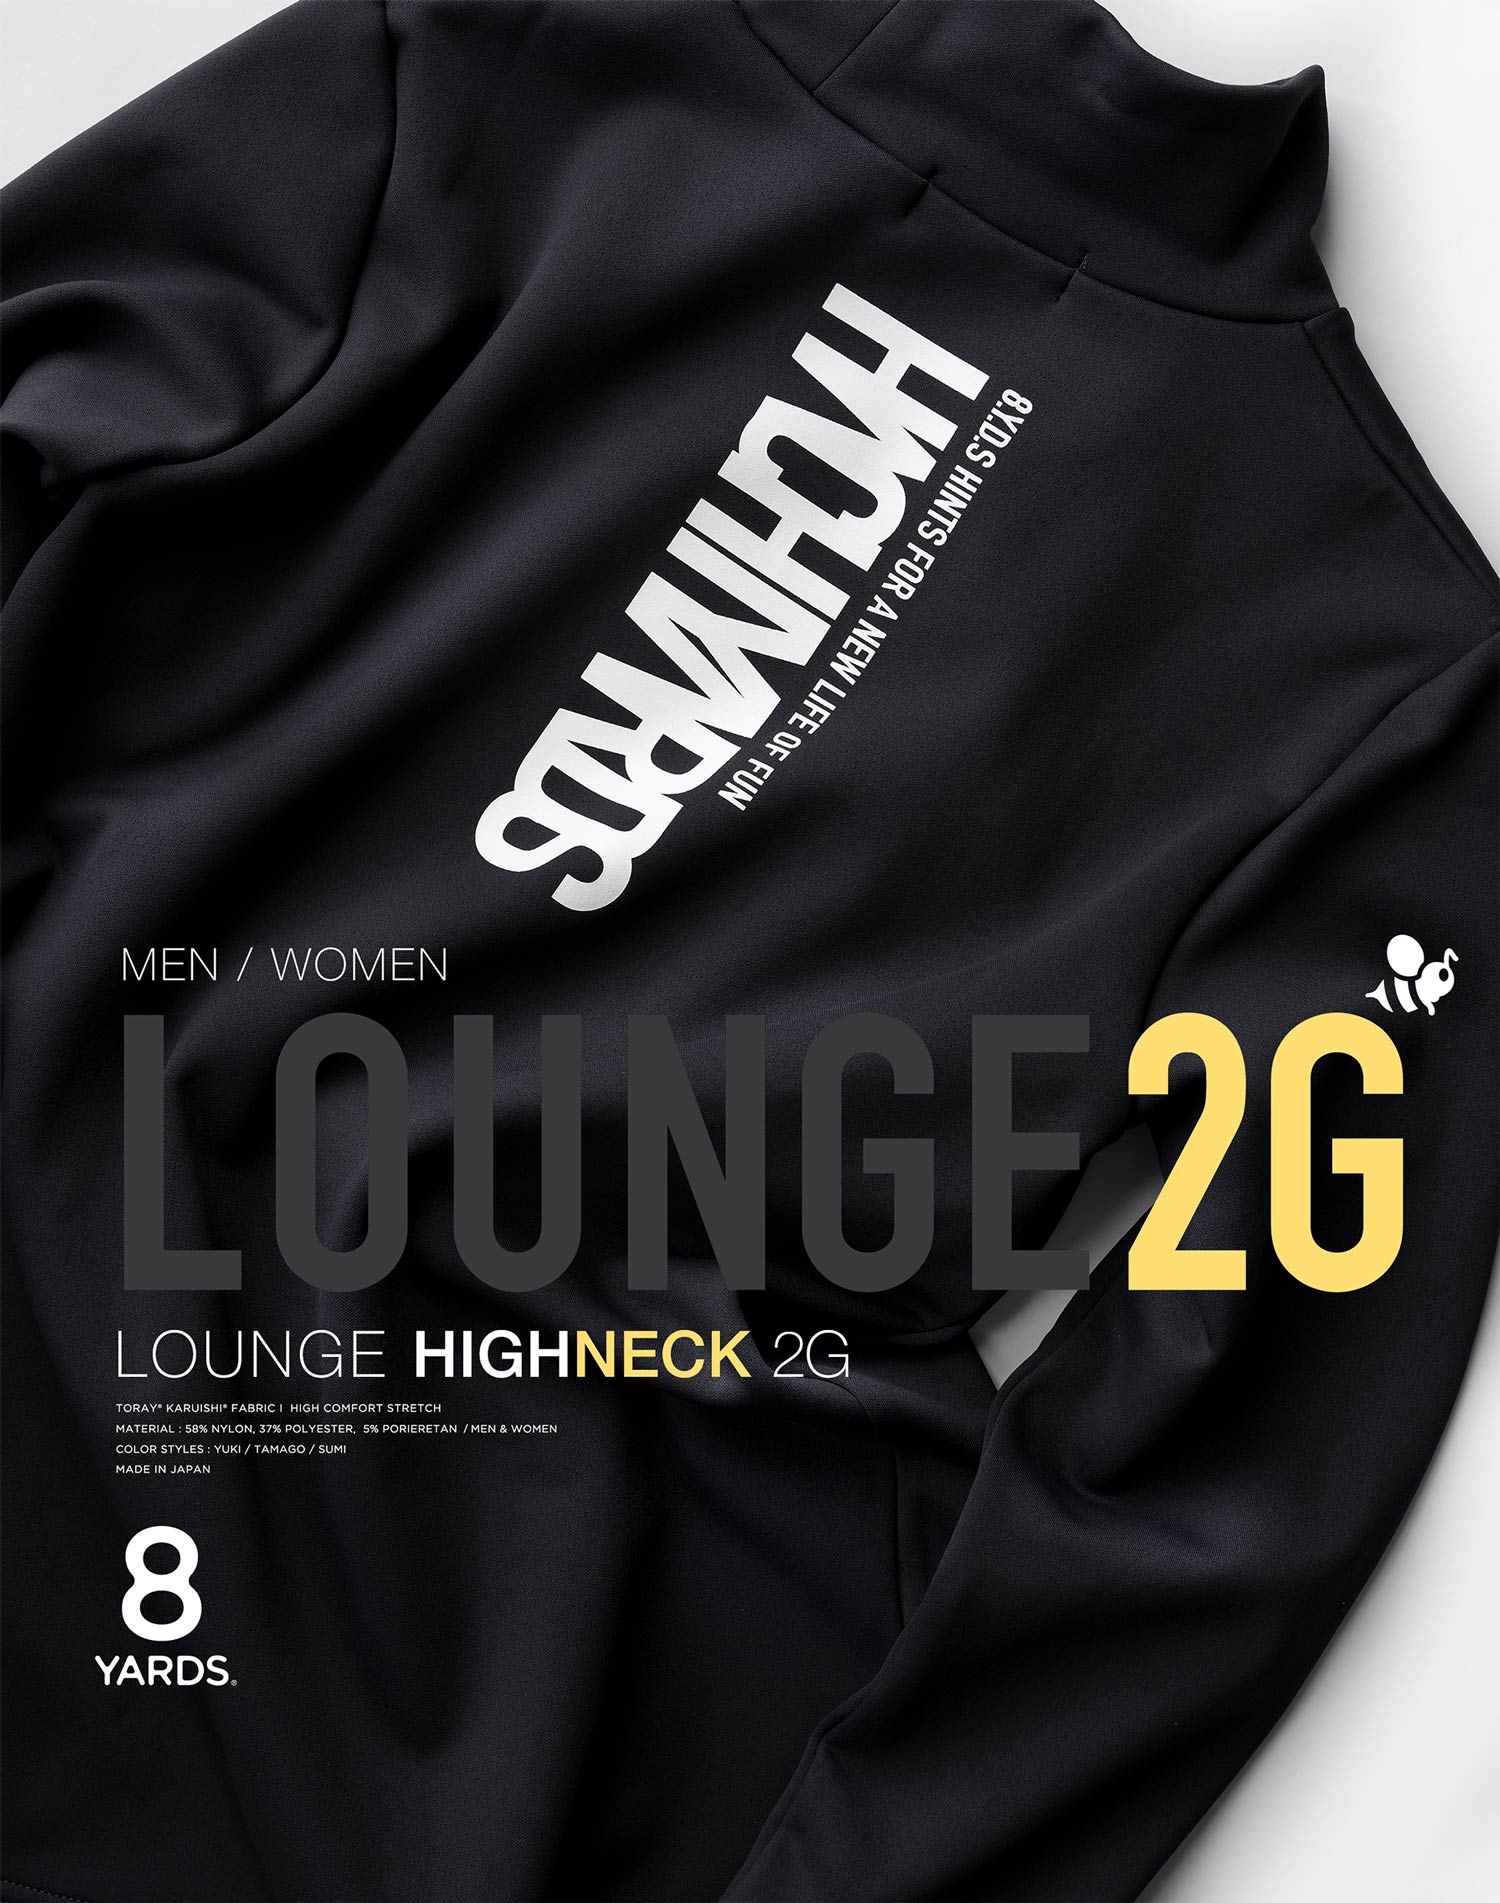 8YARDS | Lounge HighNeck 2G